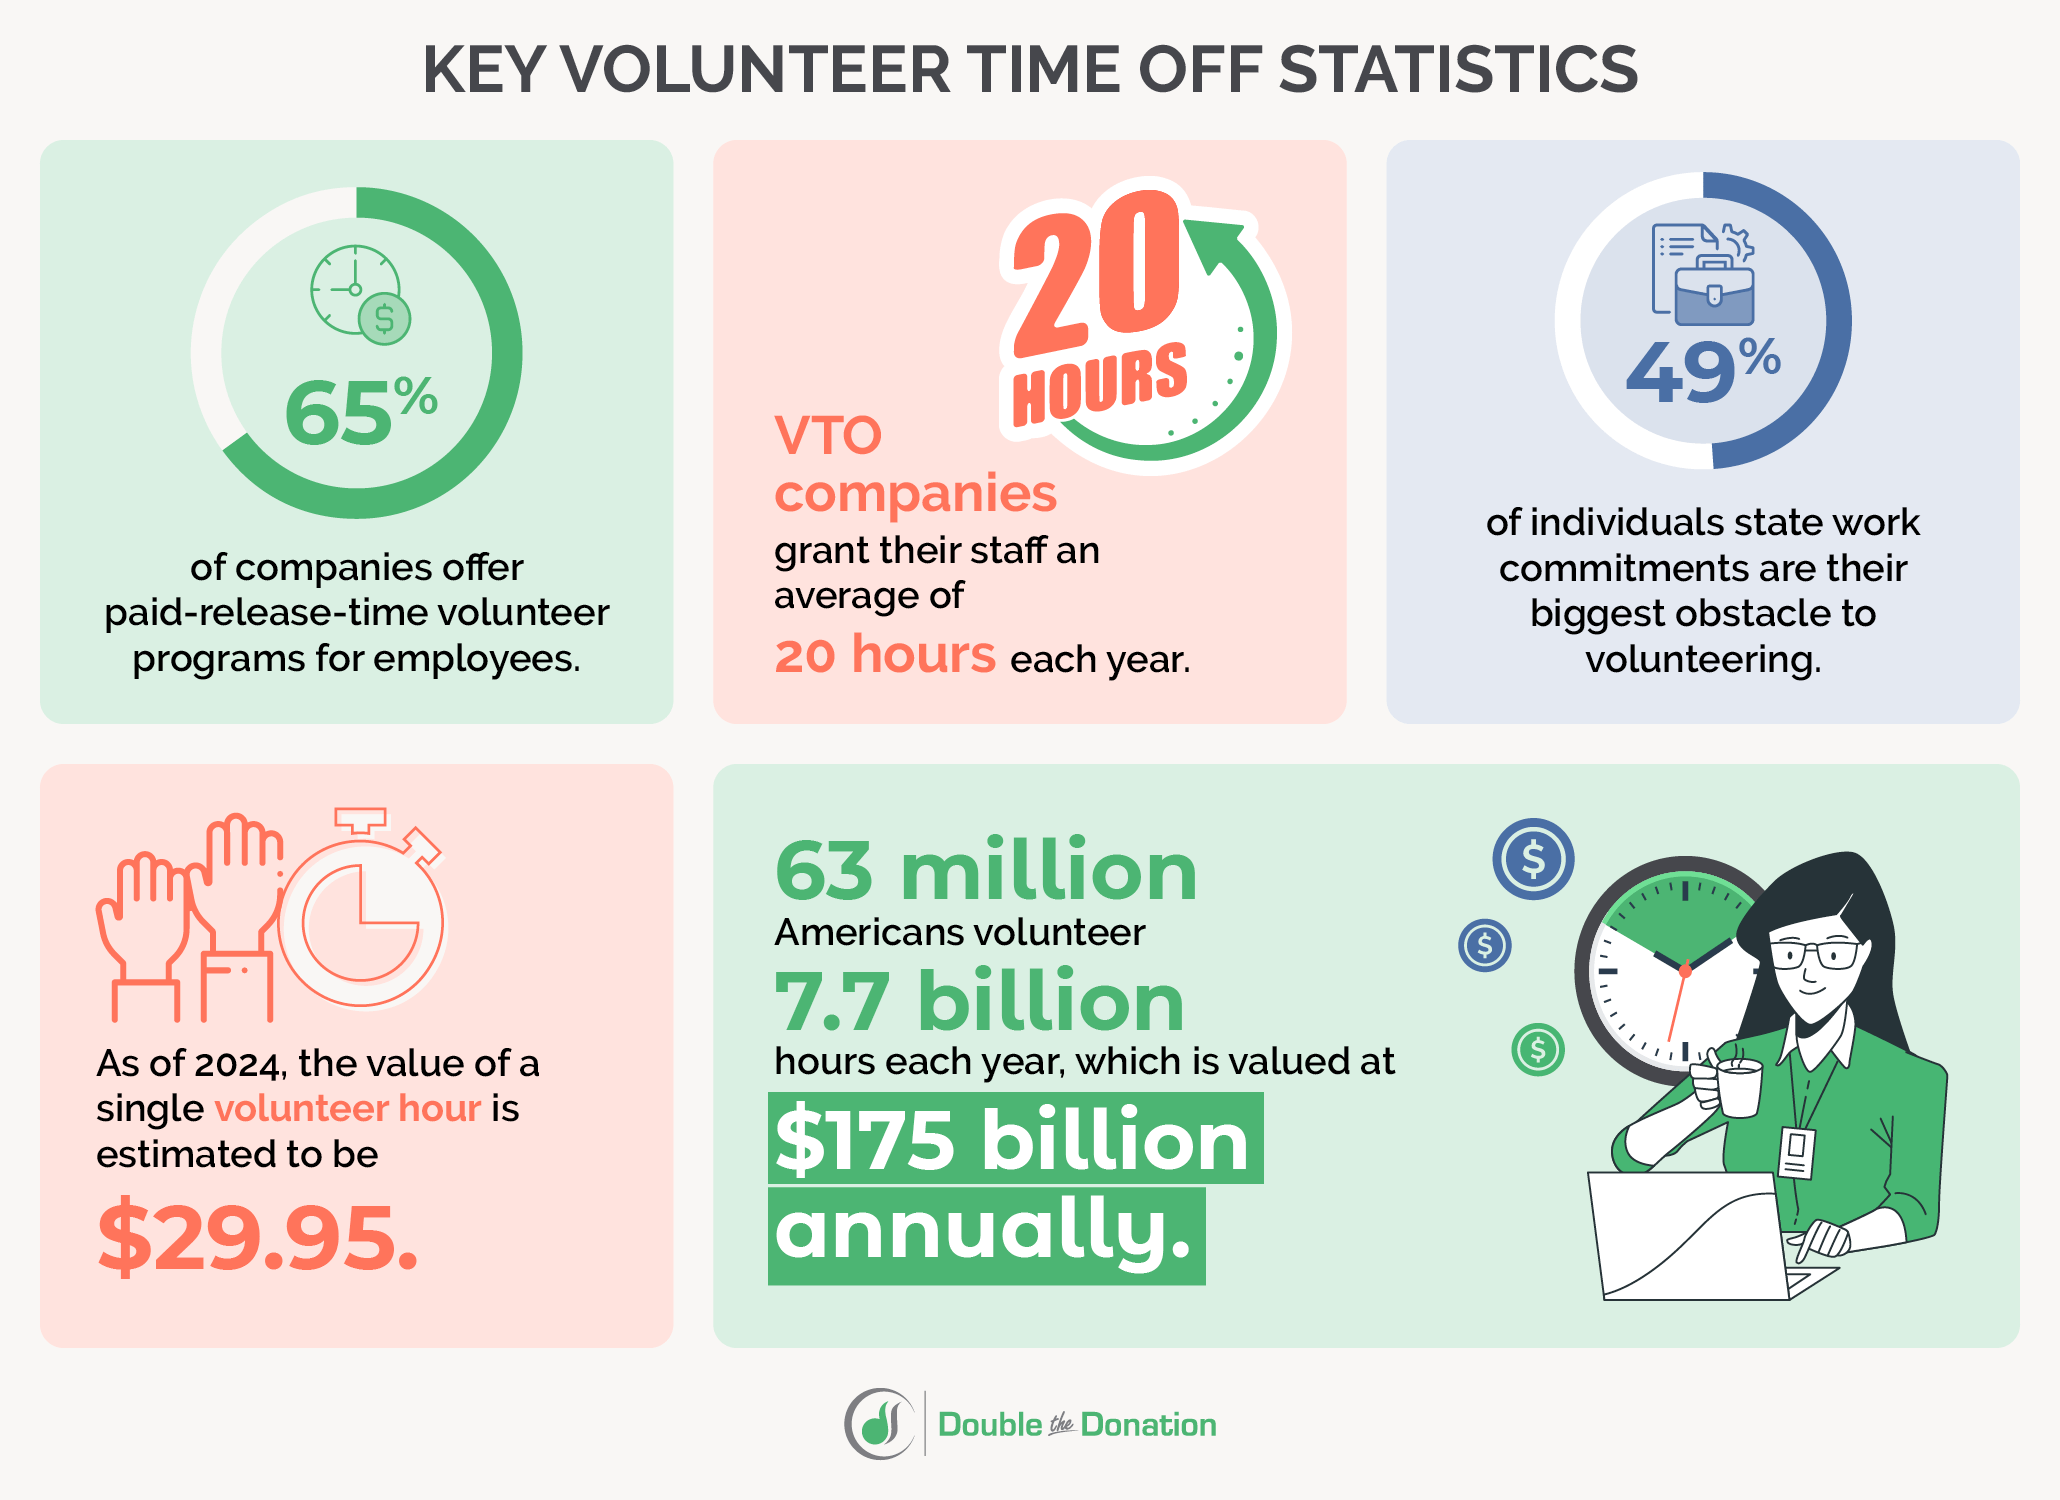 Volunteer time off statistics - general